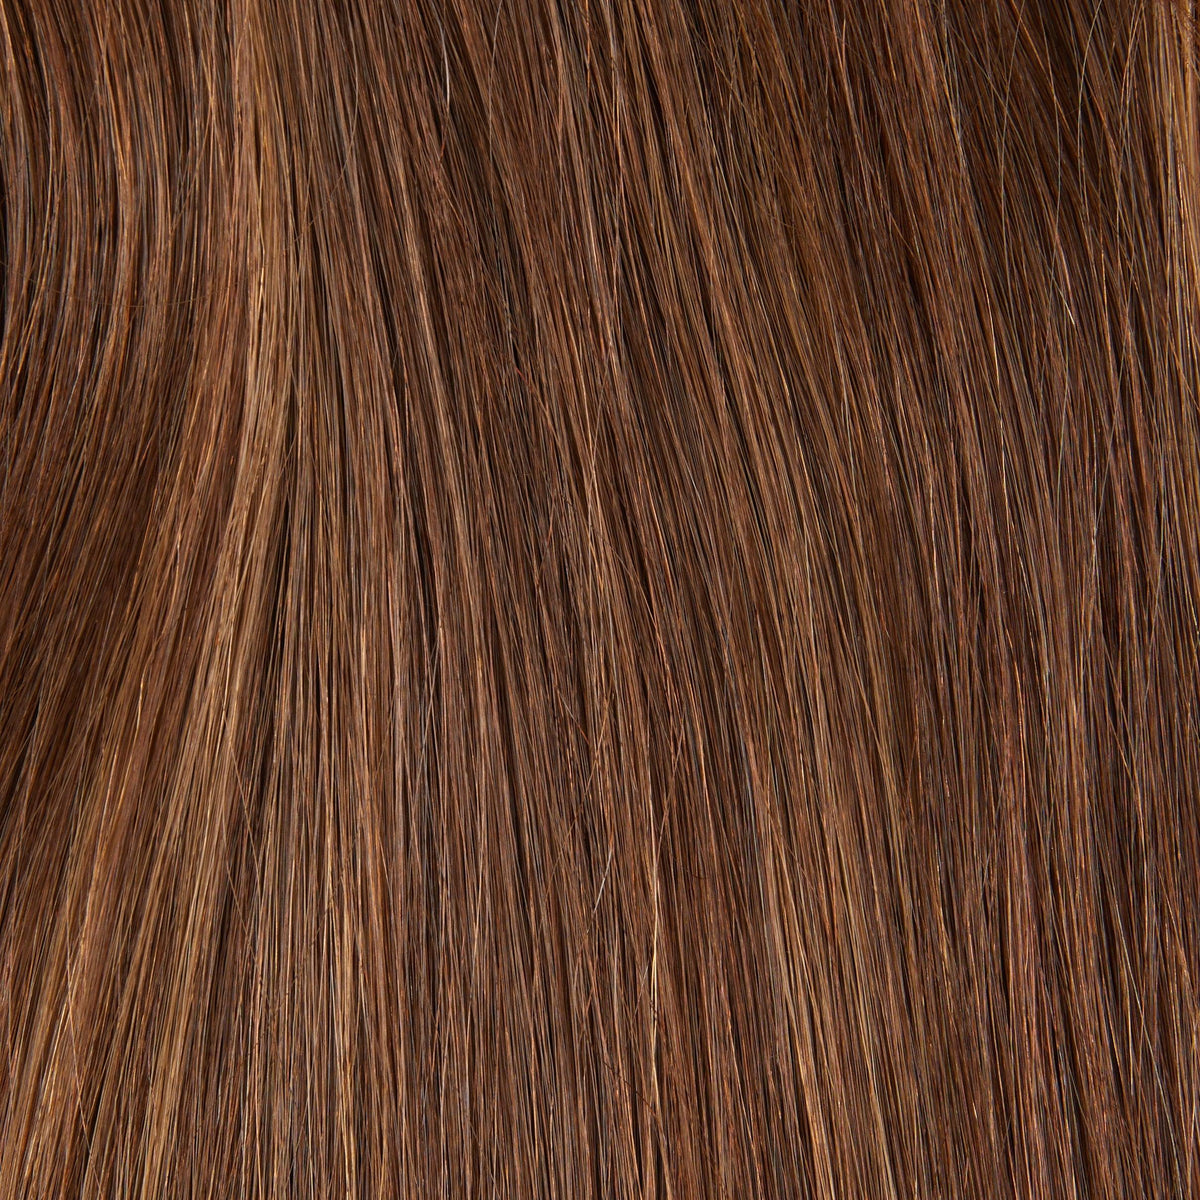 #10-6-8 - Light Brown W- Blond Highlights CVP - Fortune Wigs